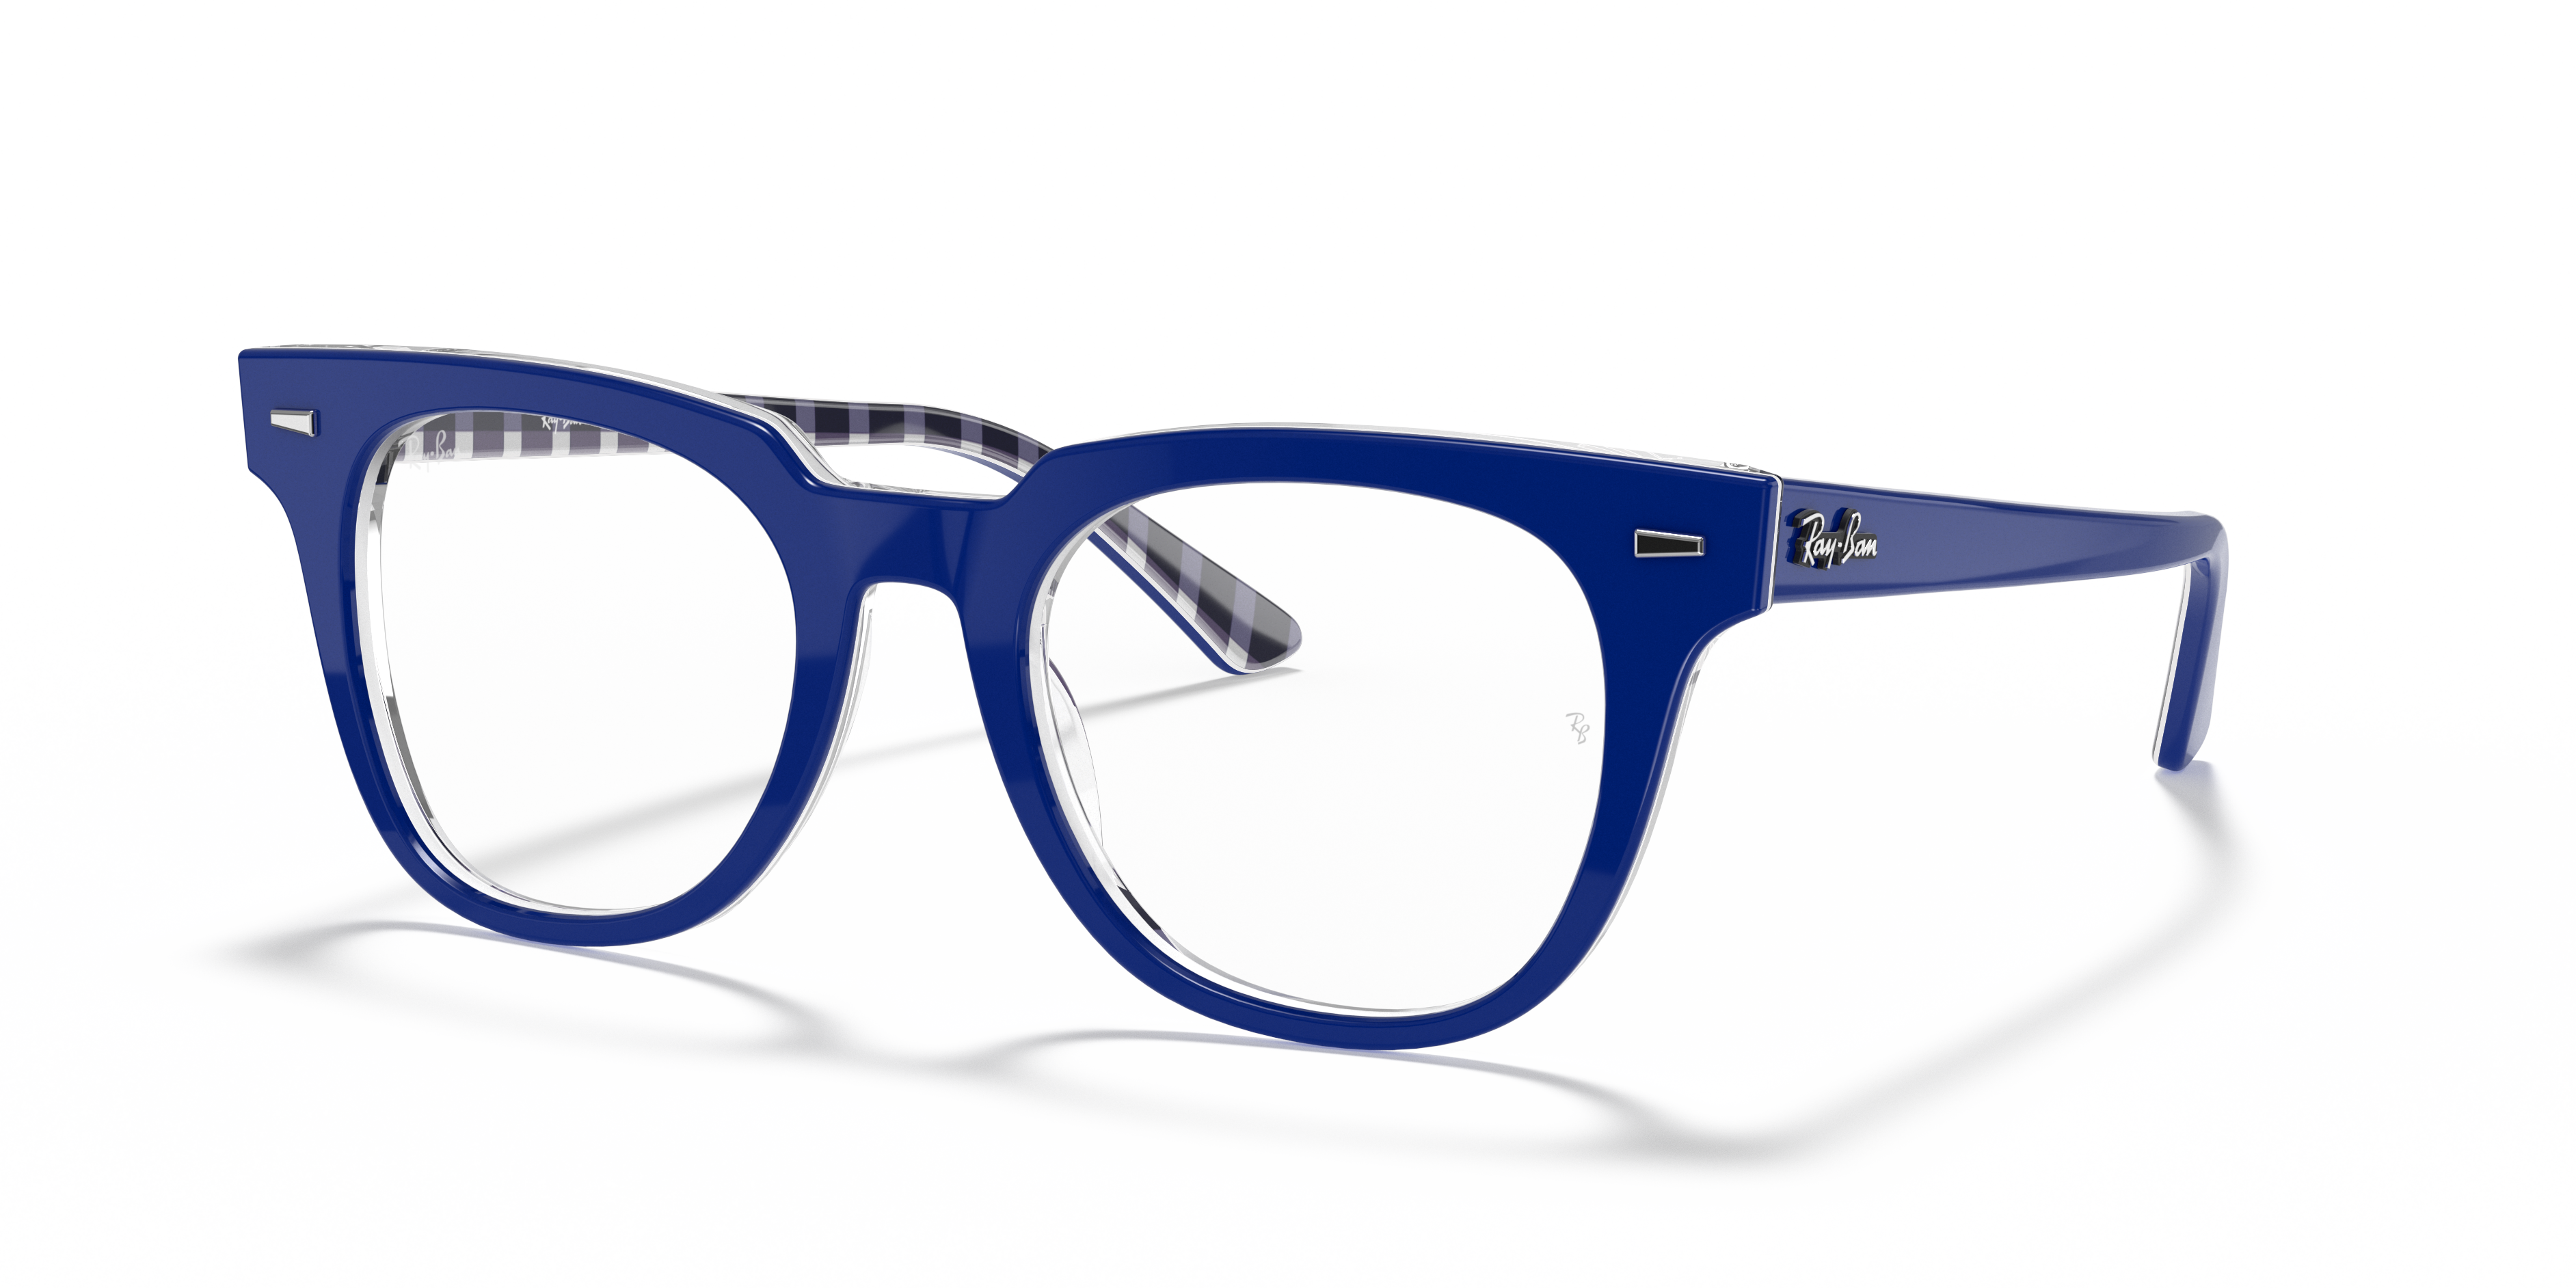 Meteor Optics Eyeglasses with Blue Frame | Ray-Ban®